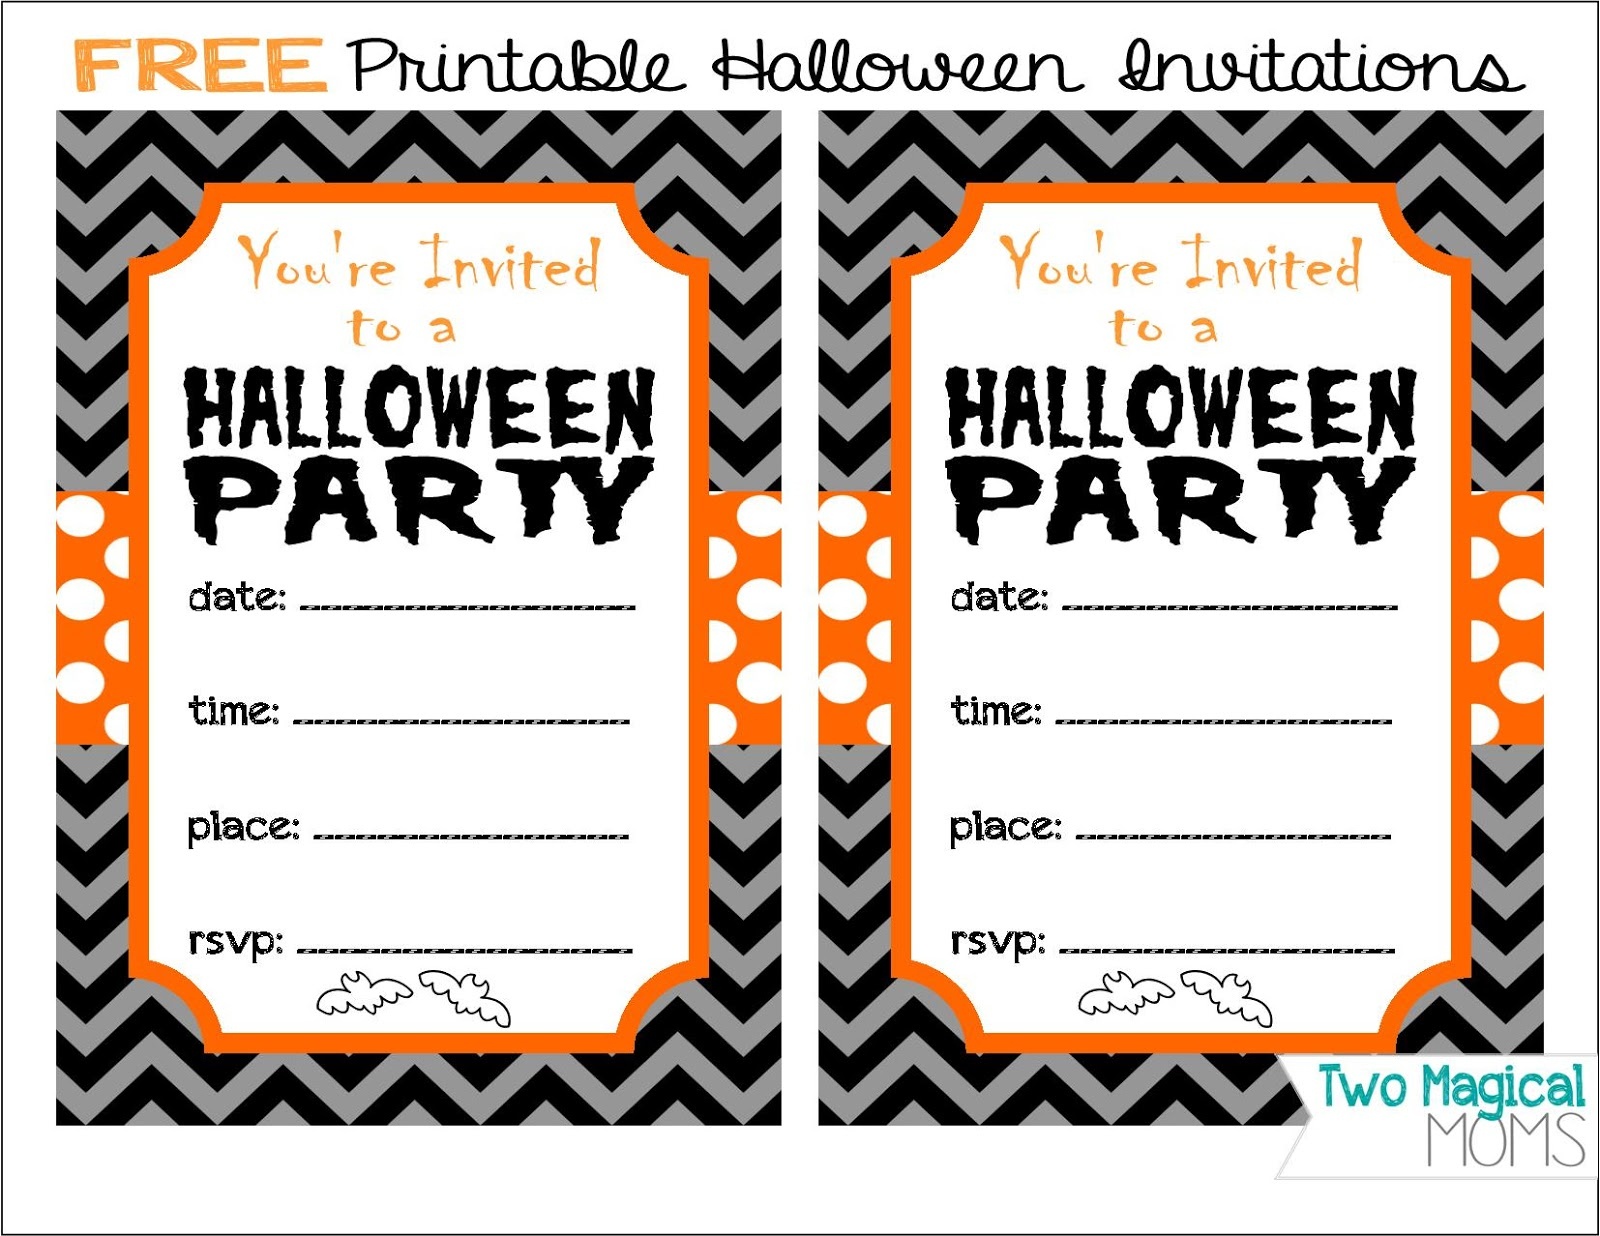 Two Magical Moms: Free Printable Halloween Invitations - Free Printable Halloween Invitations